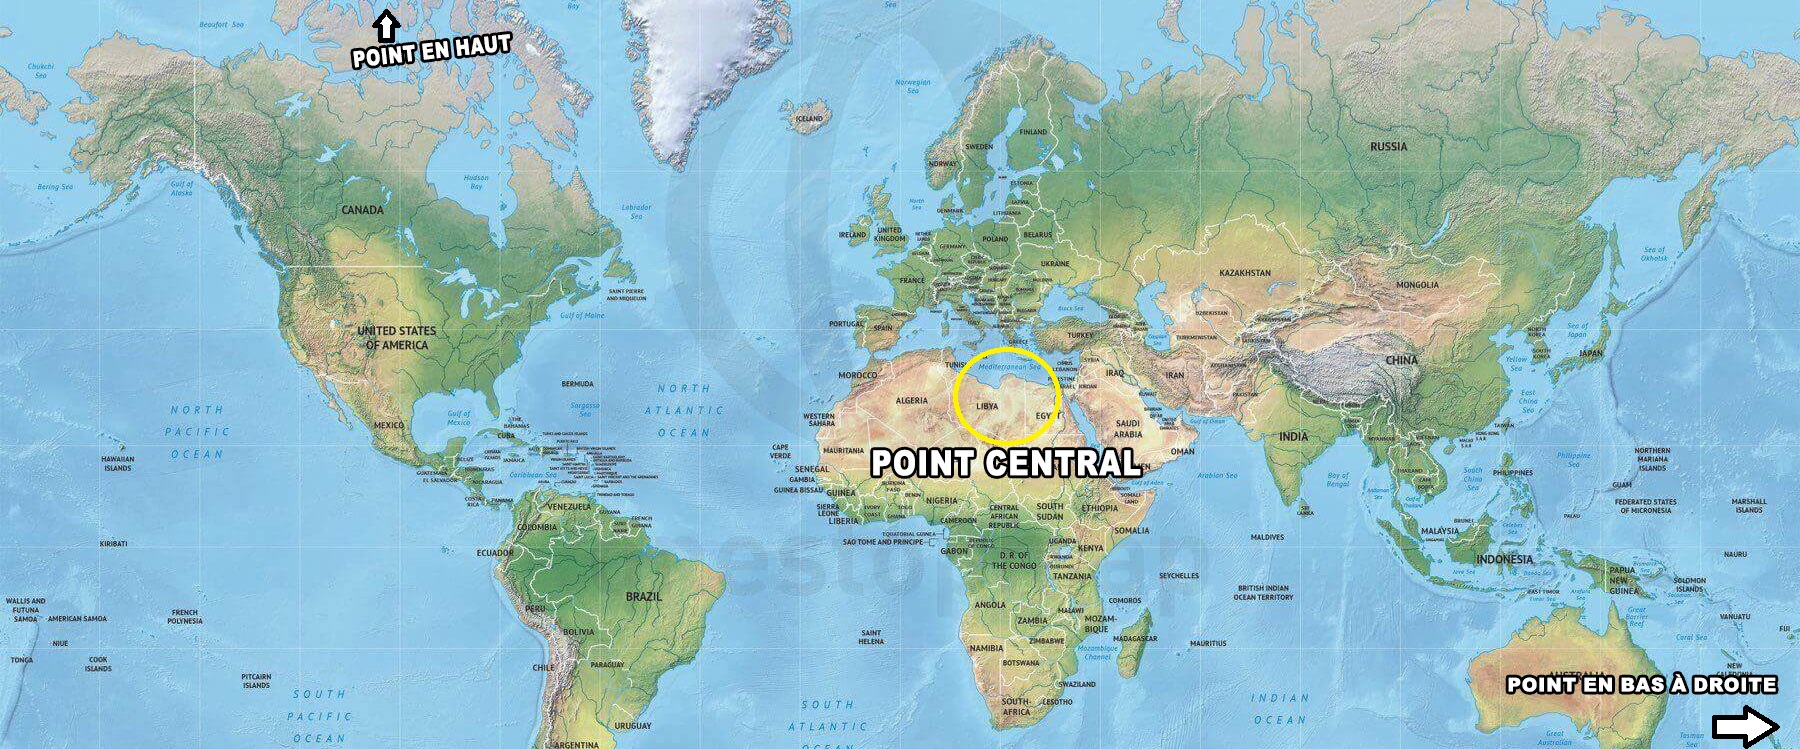 171-map-world-political-shaded-relief-mercator-europe-africa-centered - Copie - Copie.jpg